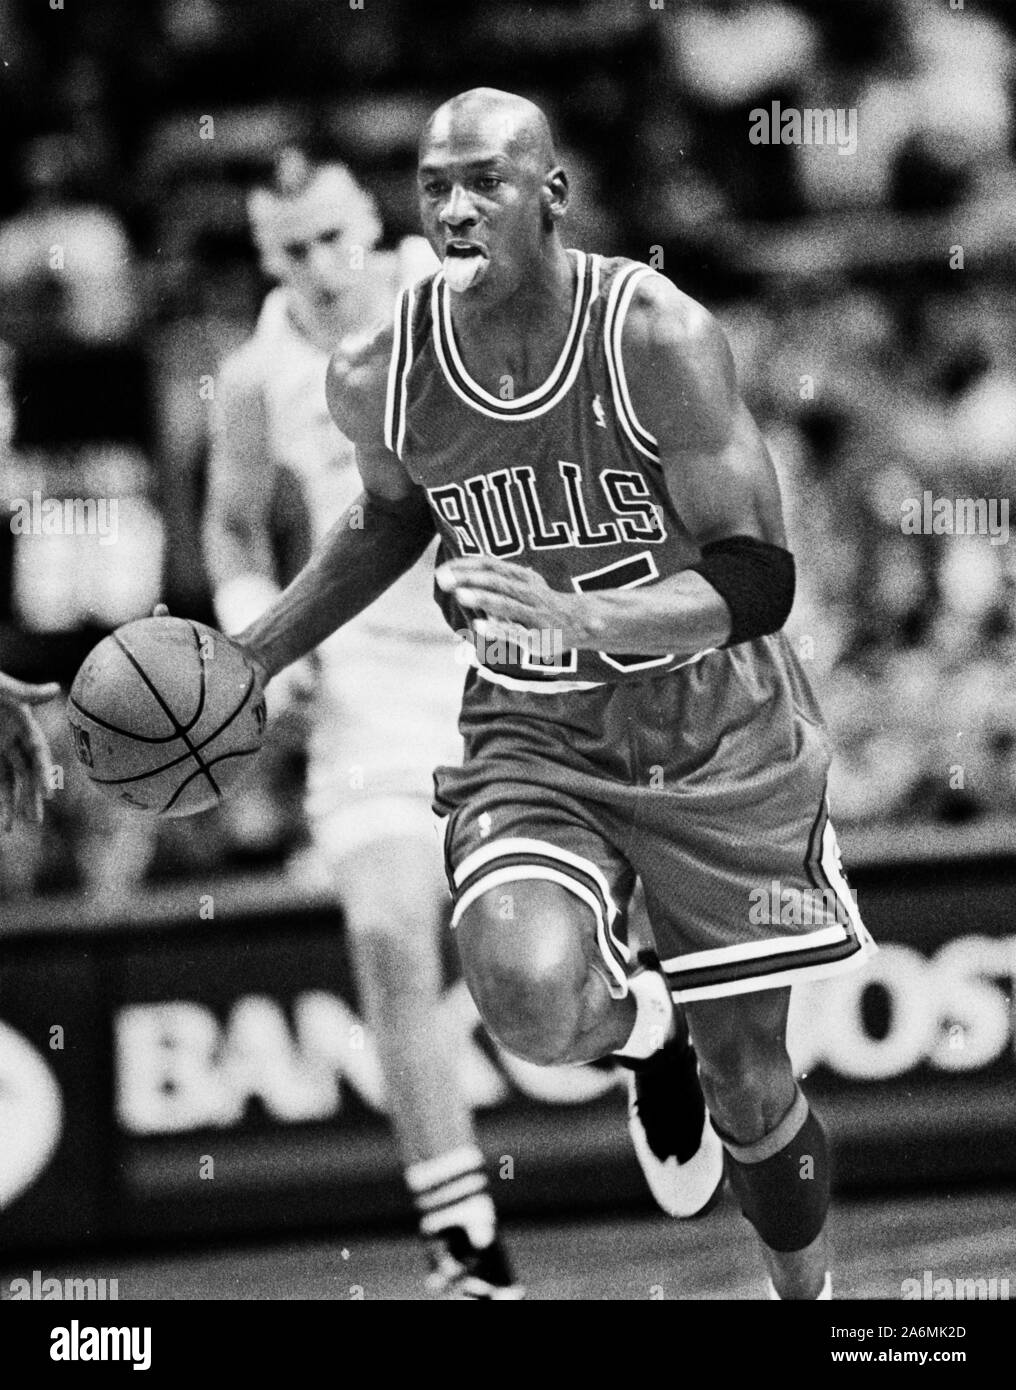 Looking back: Michael Jordan, Chicago Bulls played at UD Arena in 1995